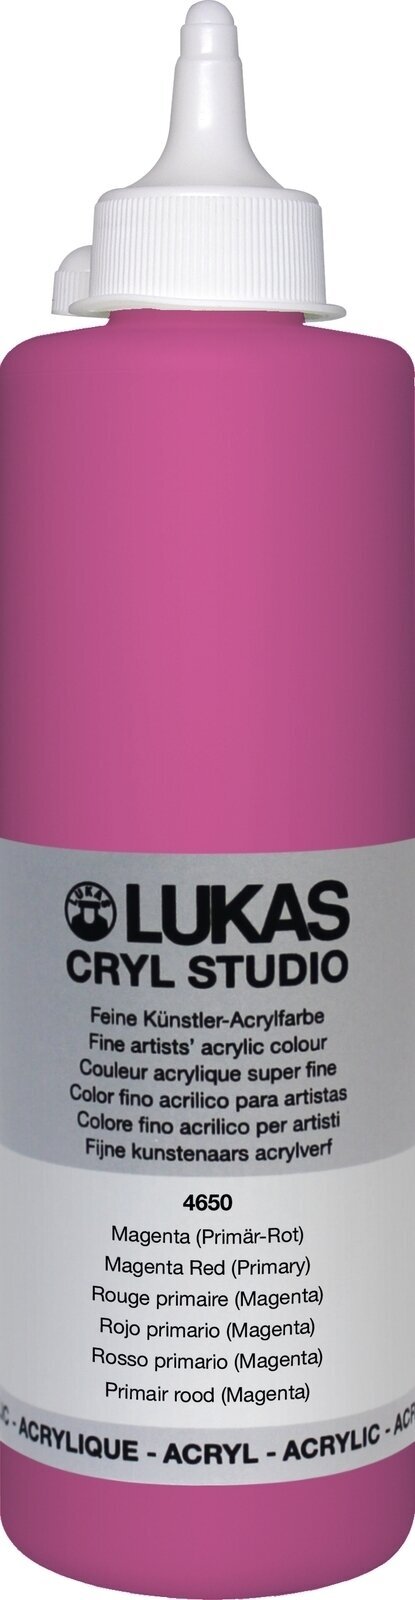 Acrylic Paint Lukas Cryl Studio Acrylic Paint 500 ml Magenta Red (Primary)